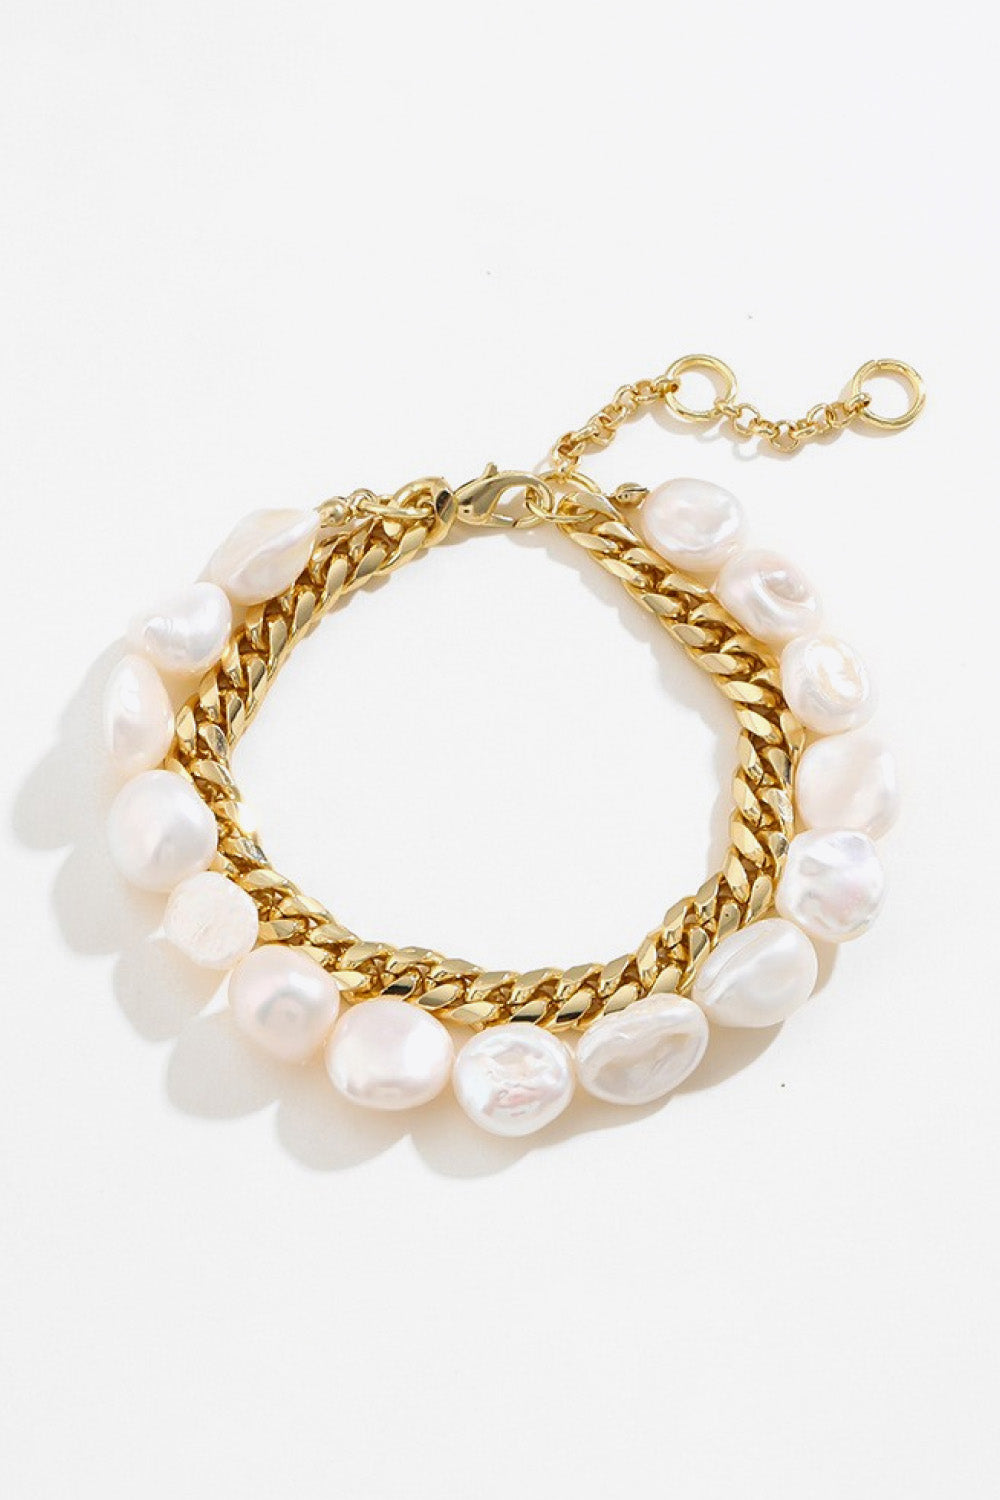 Two-Tone Double-Layered Bracelet - Gold / One Size - Women’s Jewelry - Bracelets - 1 - 2024